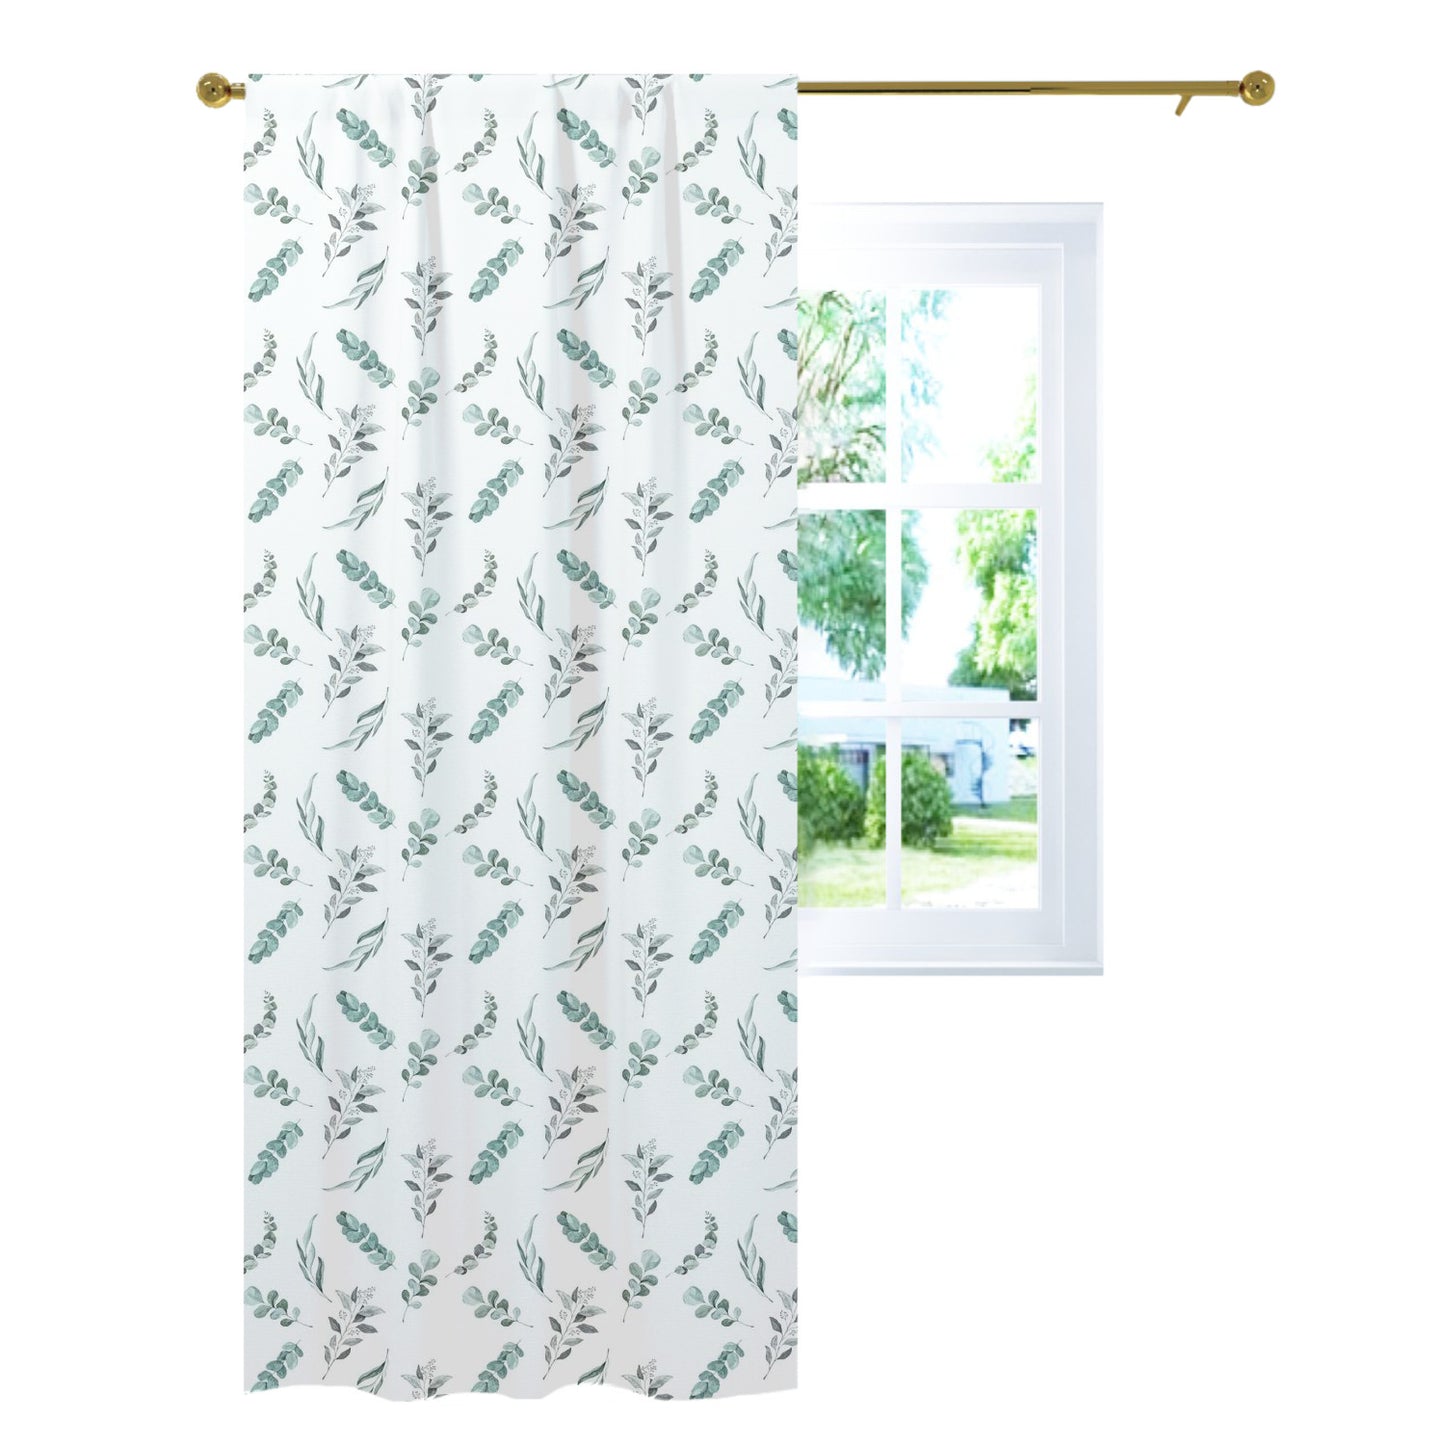 Eucalyptus Curtain, Single Panel, Leaves nursery decor - Greenery Woodland